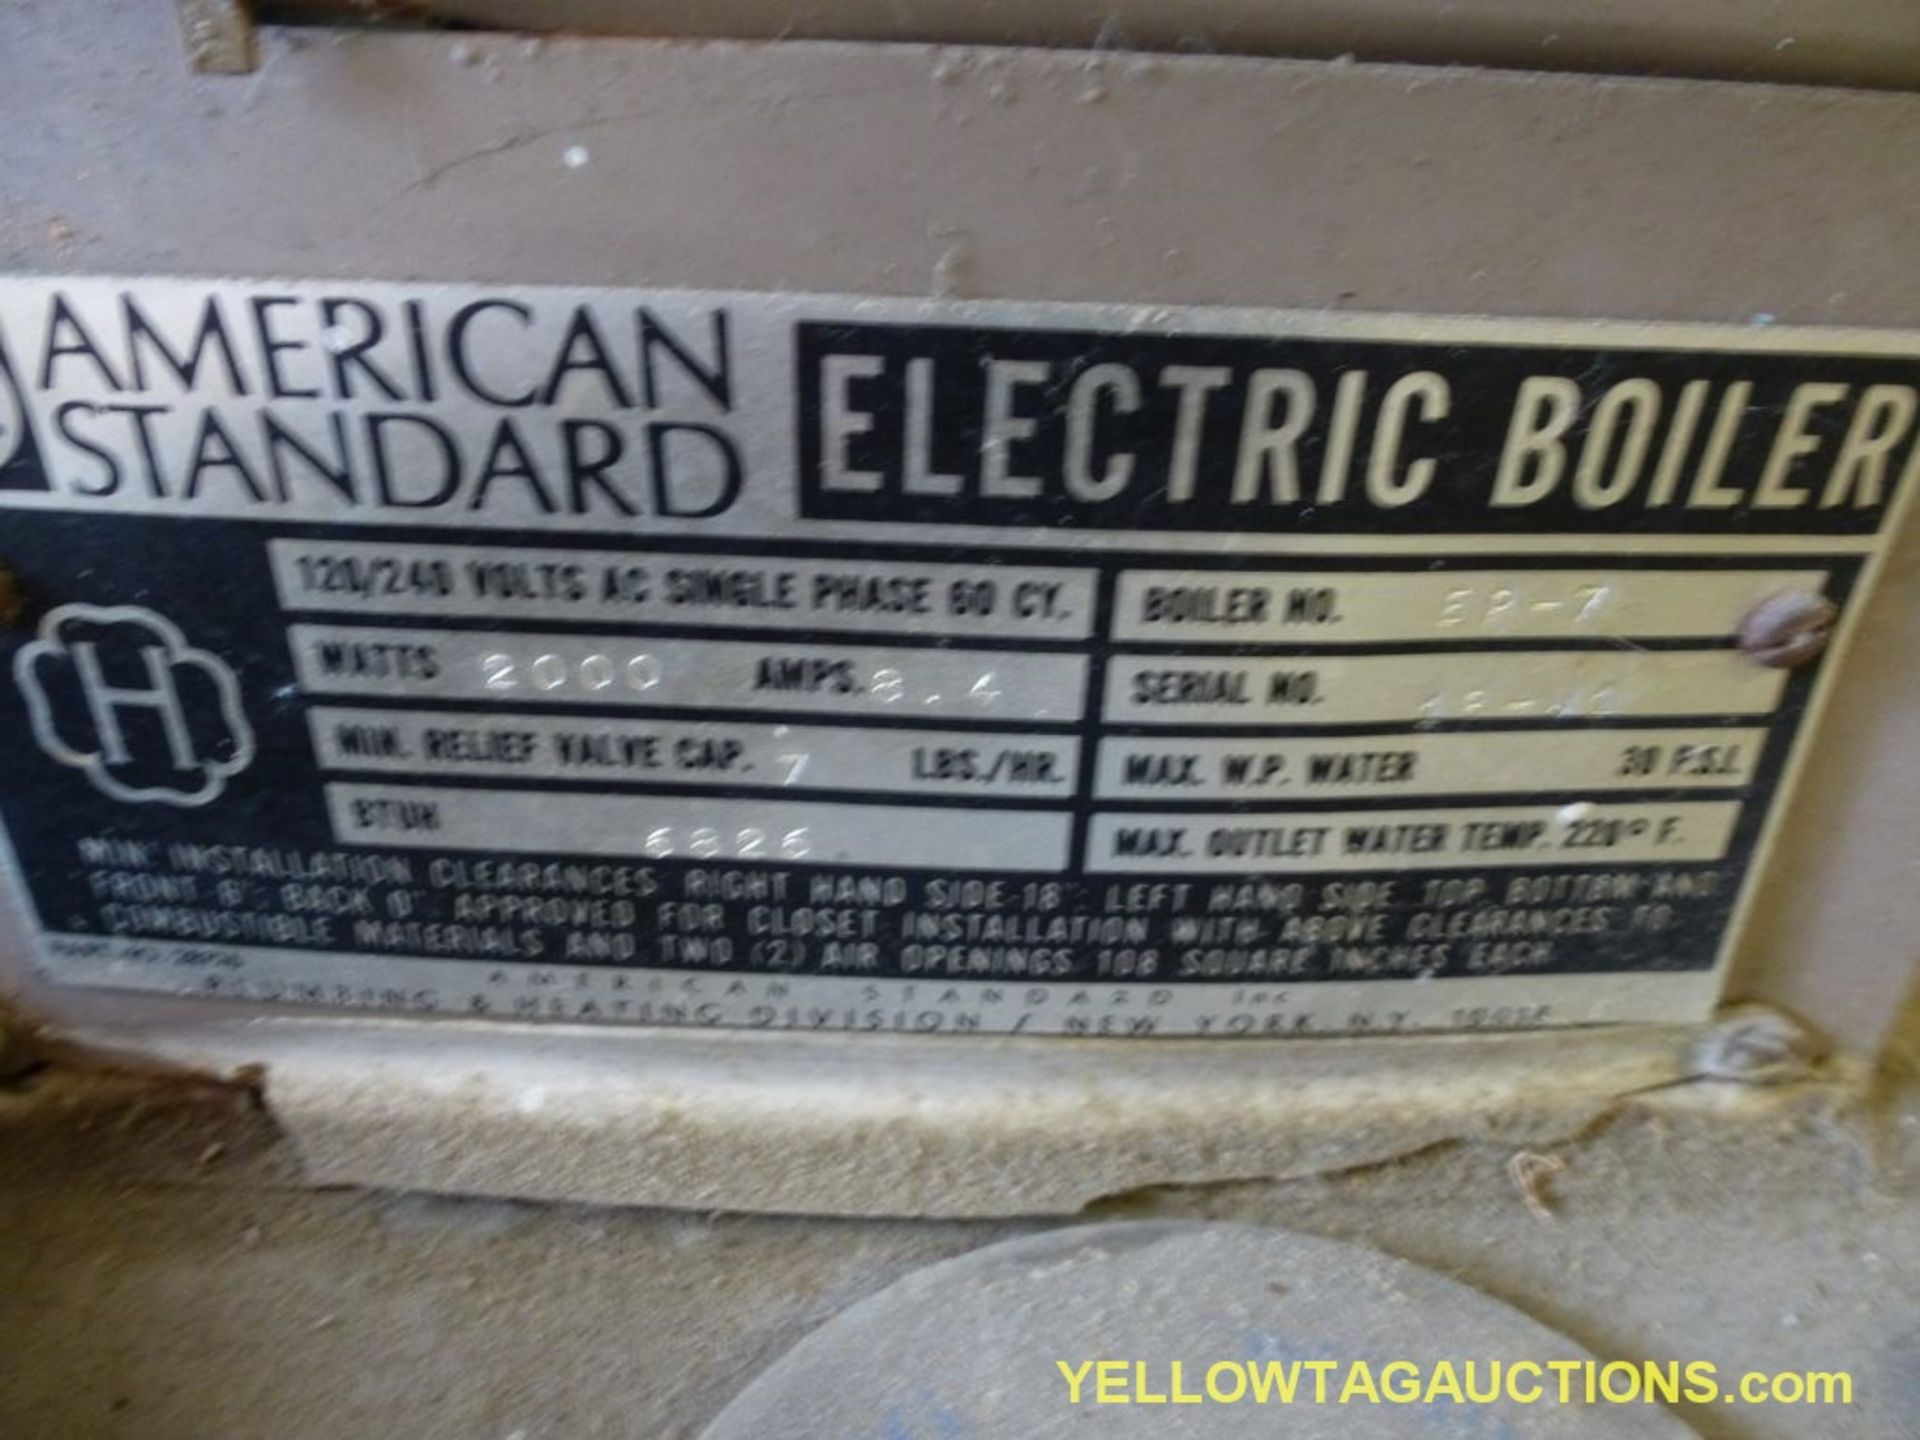 American Standard Electric Boiler|2,000 W7 lb/hr220 Deg F30 PSILocation: Charlotte, NC - Image 4 of 4